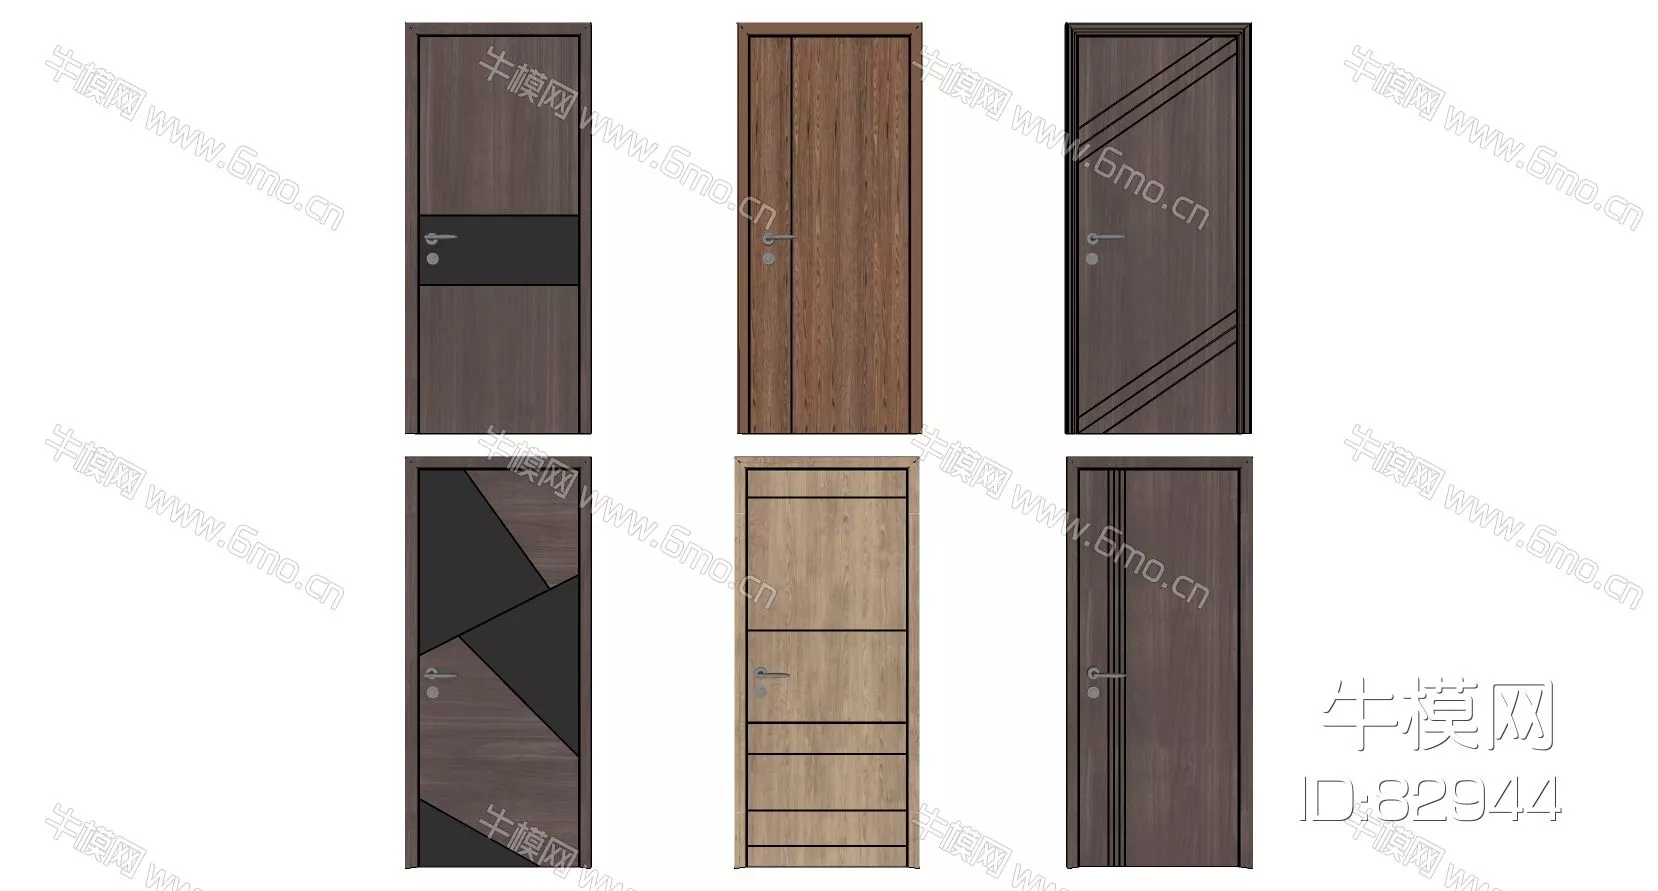 MODERN DOOR AND WINDOWS - SKETCHUP 3D MODEL - ENSCAPE - 82944